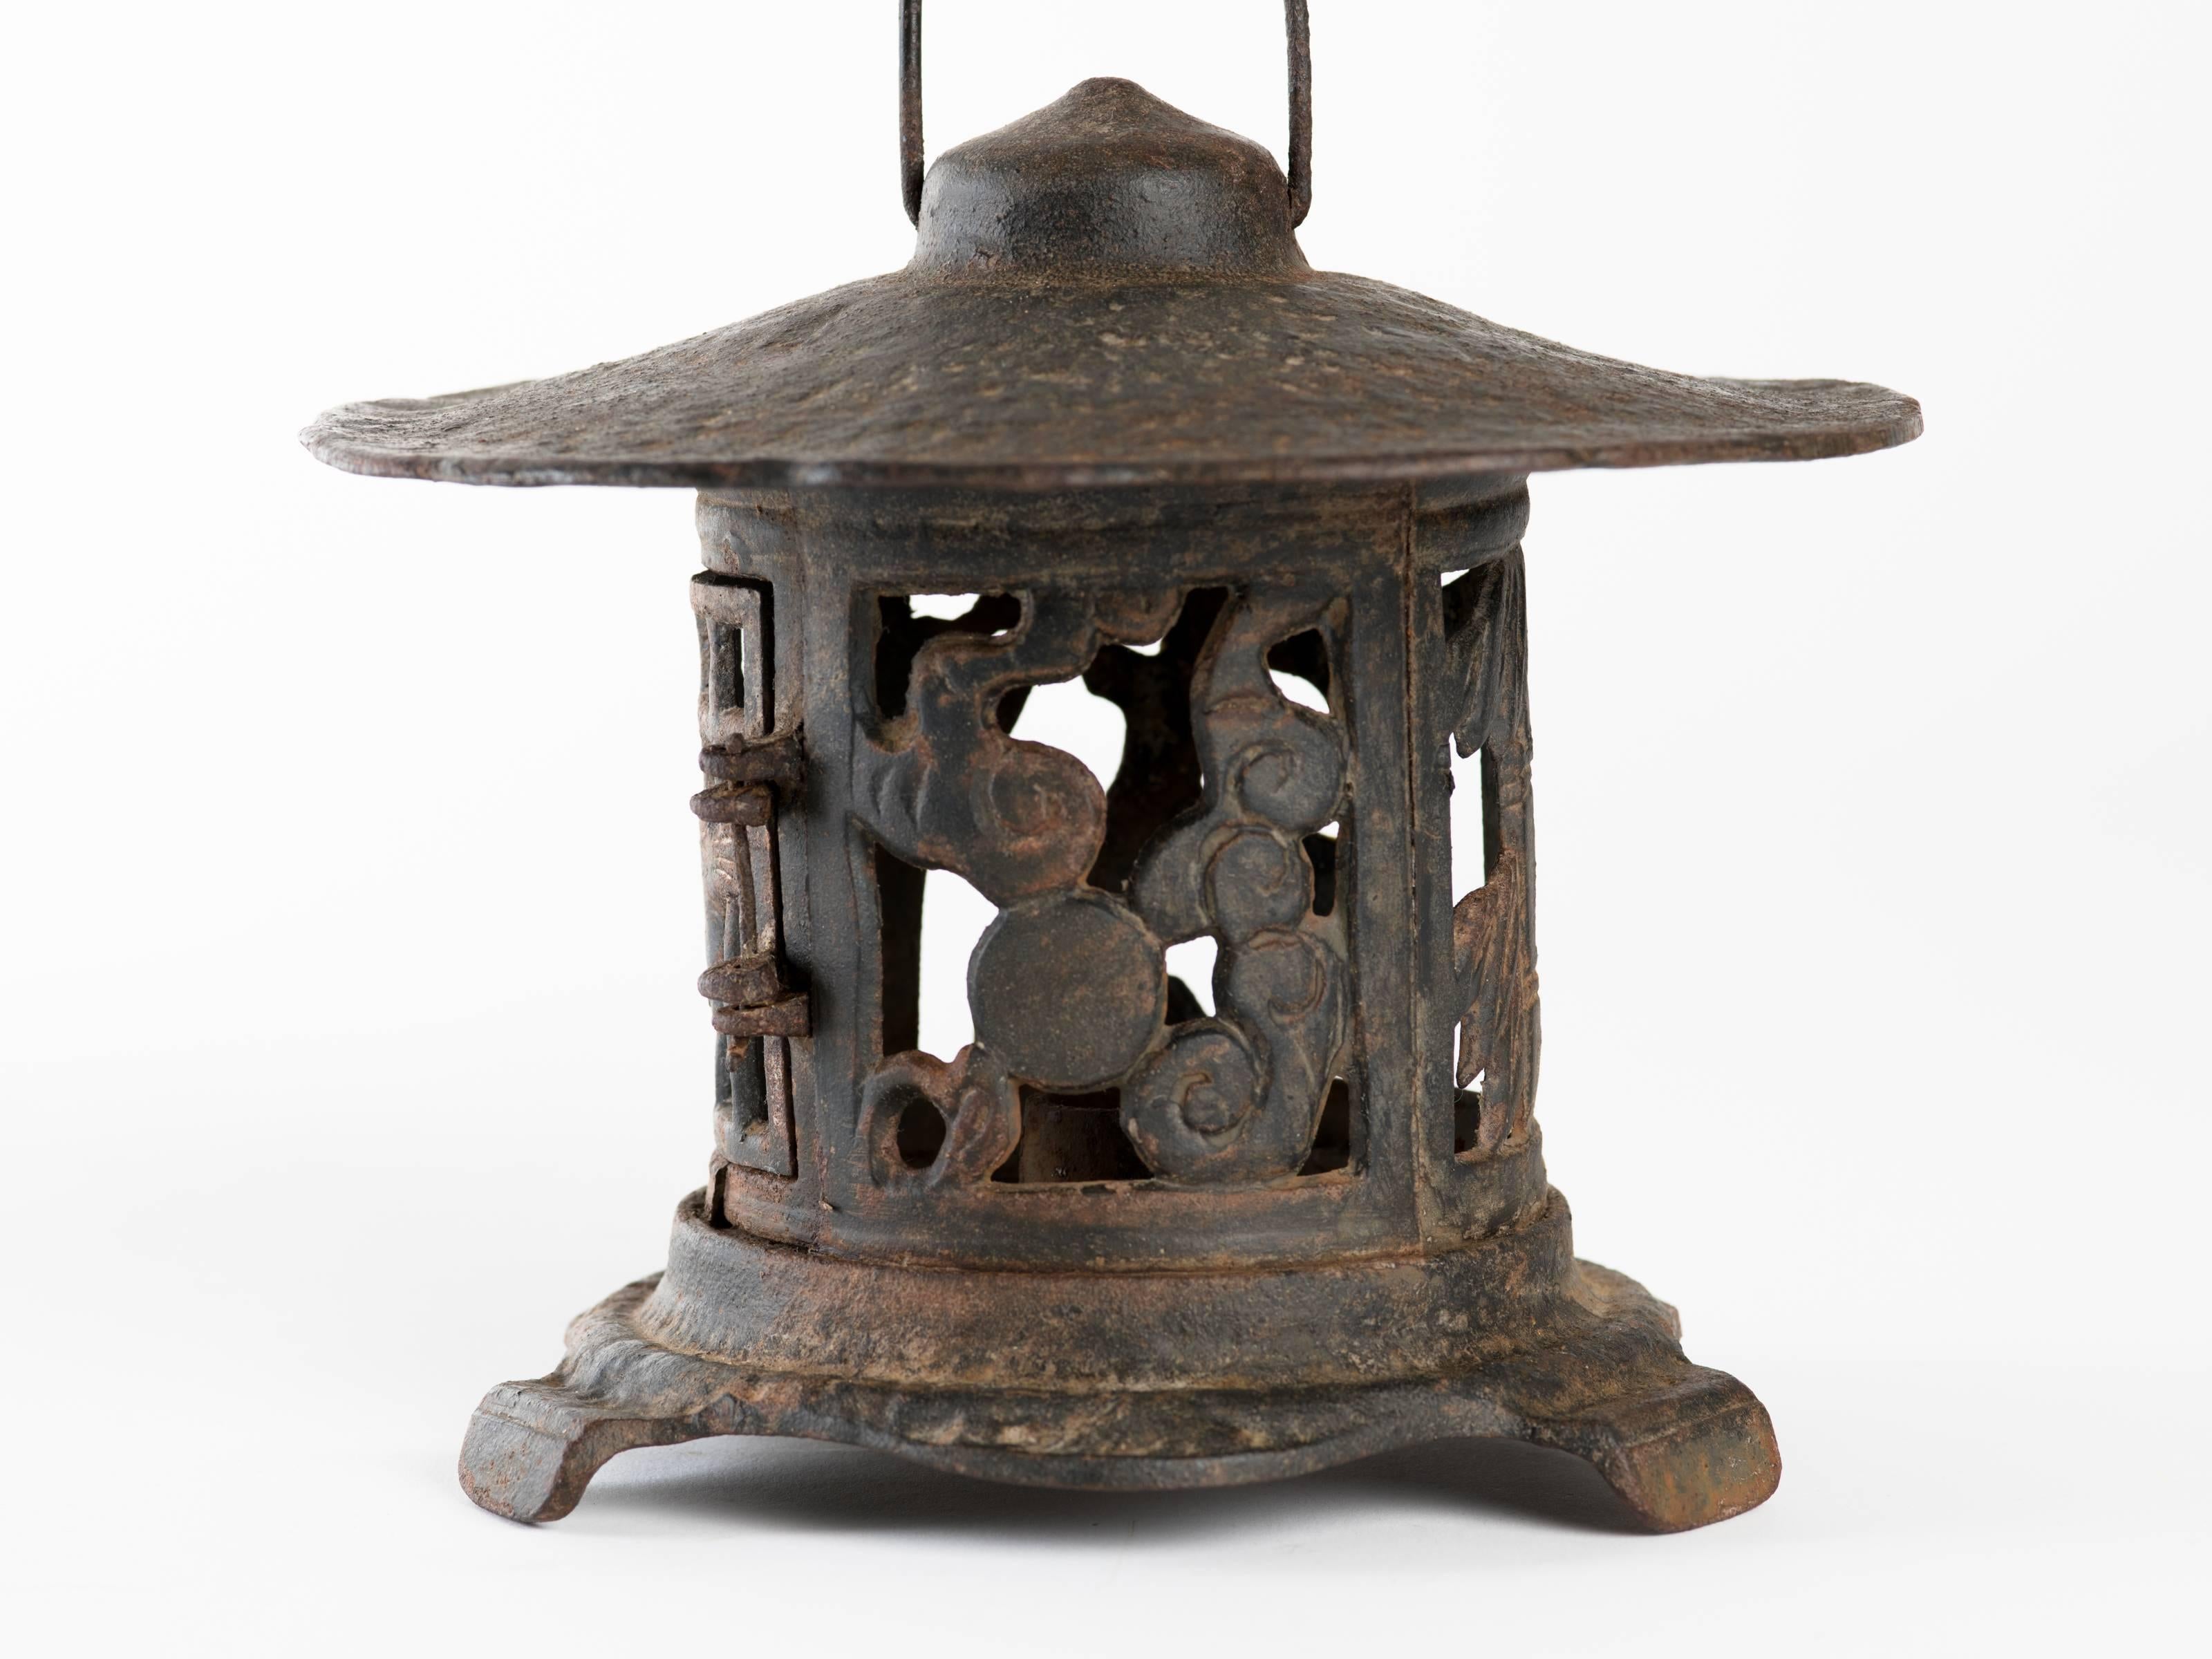 Japanese cast iron pagoda lantern has circular screen sides with tree and bird motif, hinged door. Single candle holder interior. 